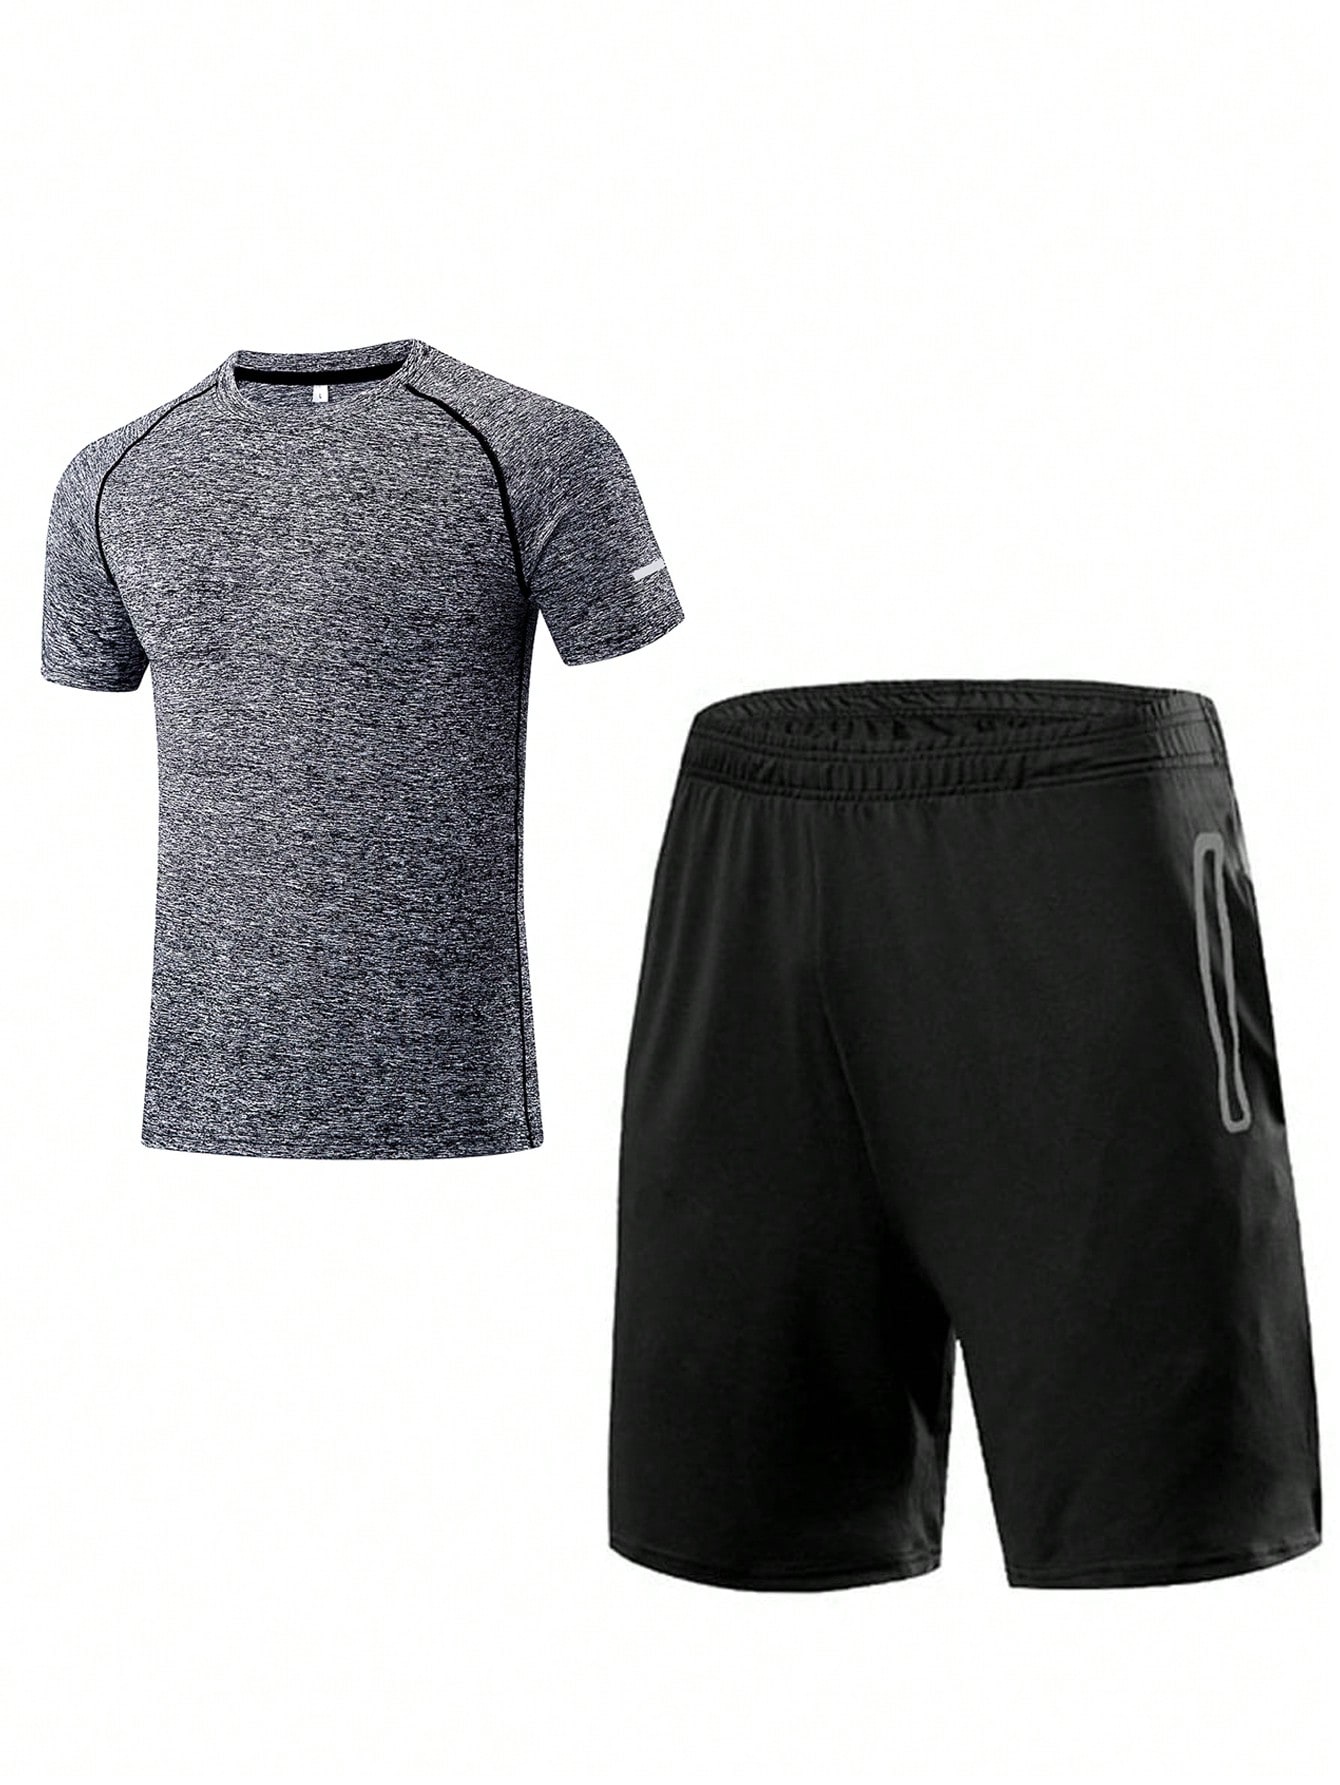 цена Летняя мужская спортивная одежда, светло-серый